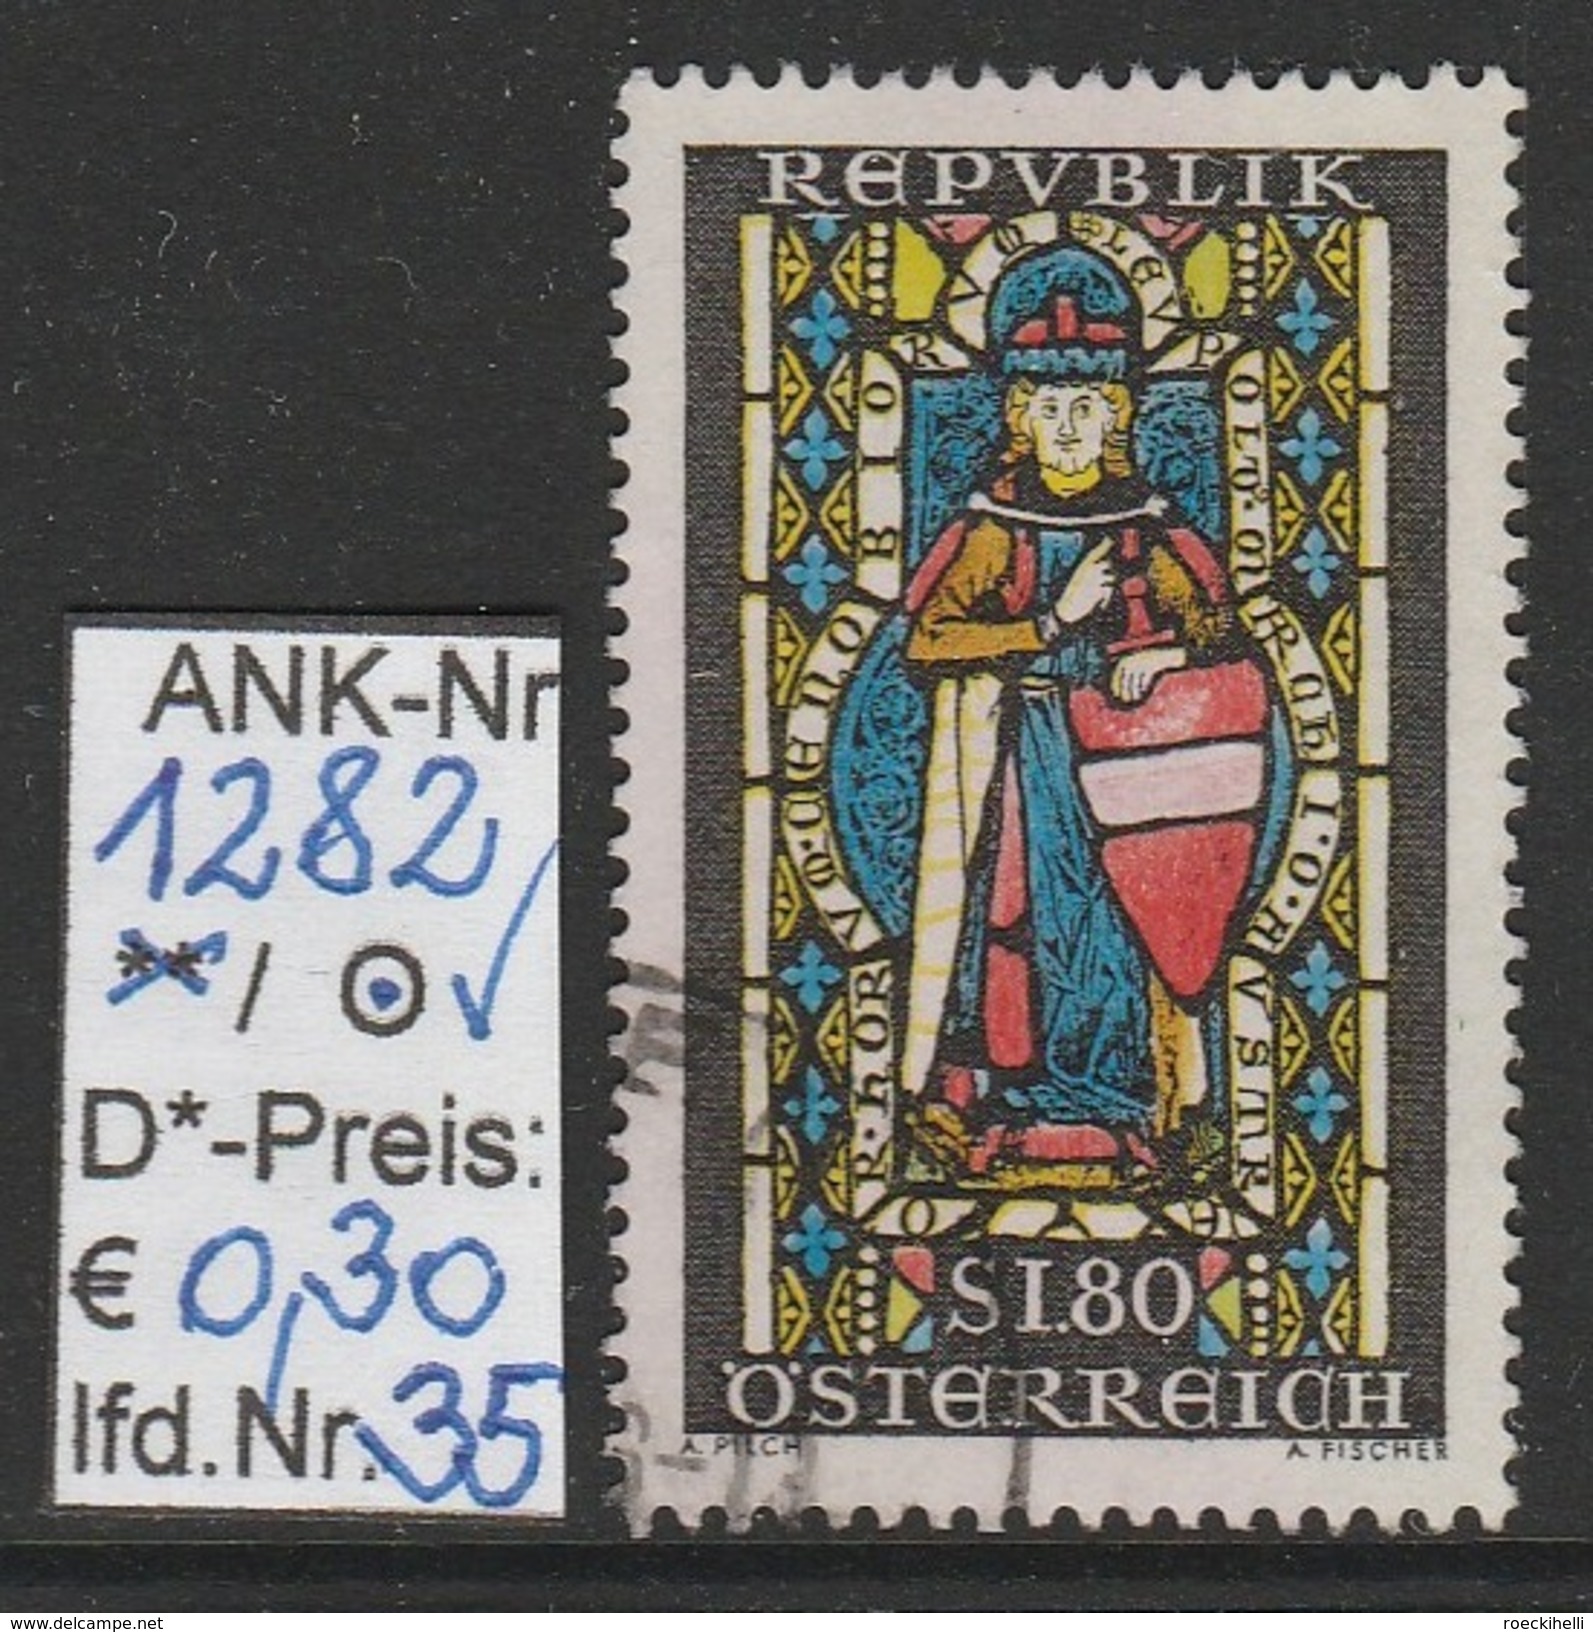 15.11.1967 - SM "Markgraf Leopold der Heilige" -  o gestempelt - siehe Scan  (1282o 01-36)